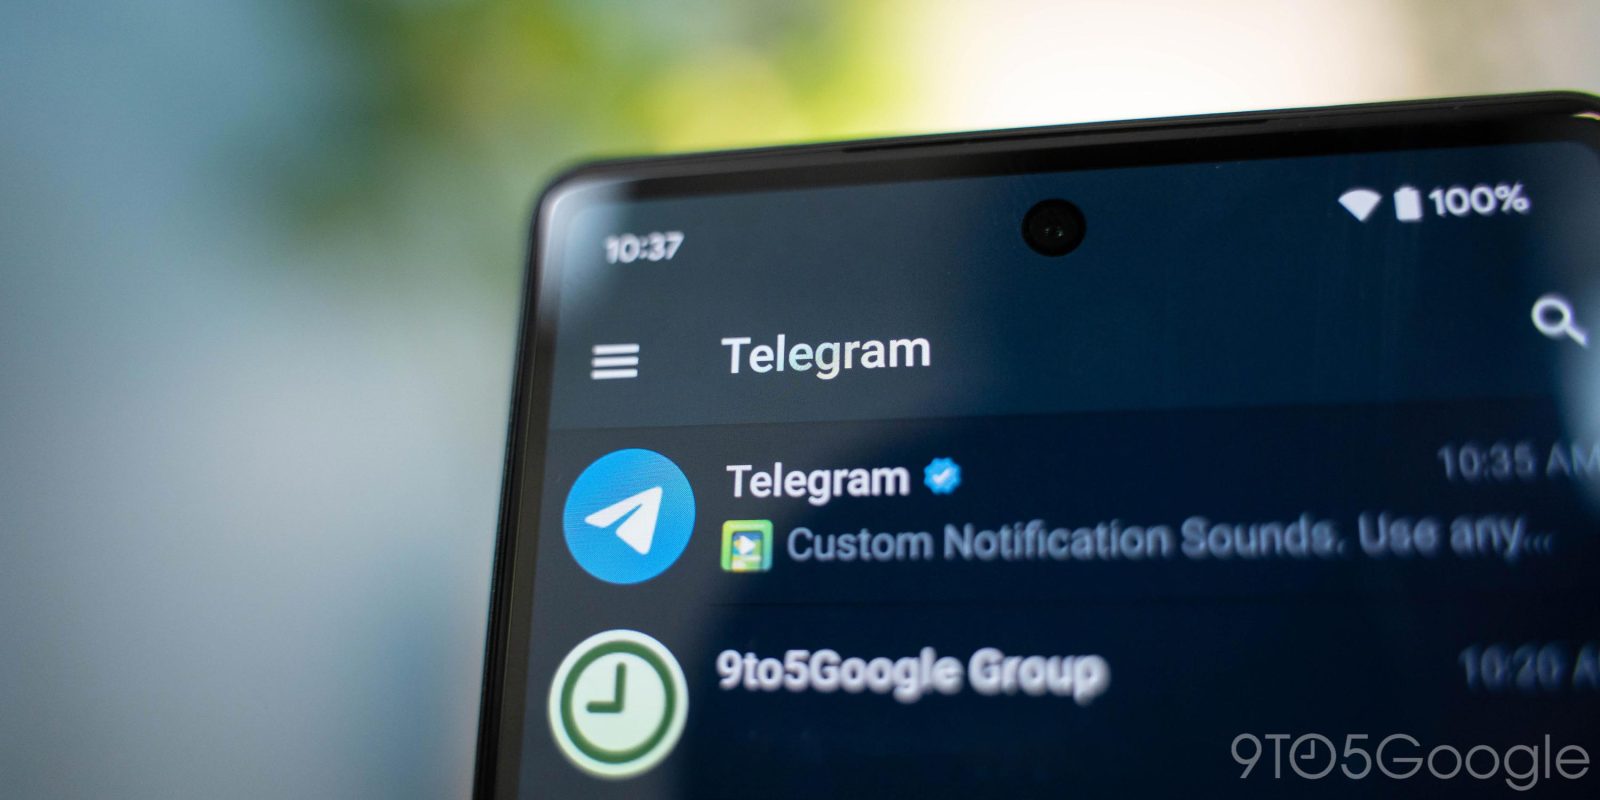 Обновить телеграмм до последней версии на андроид бесплатно фото 29